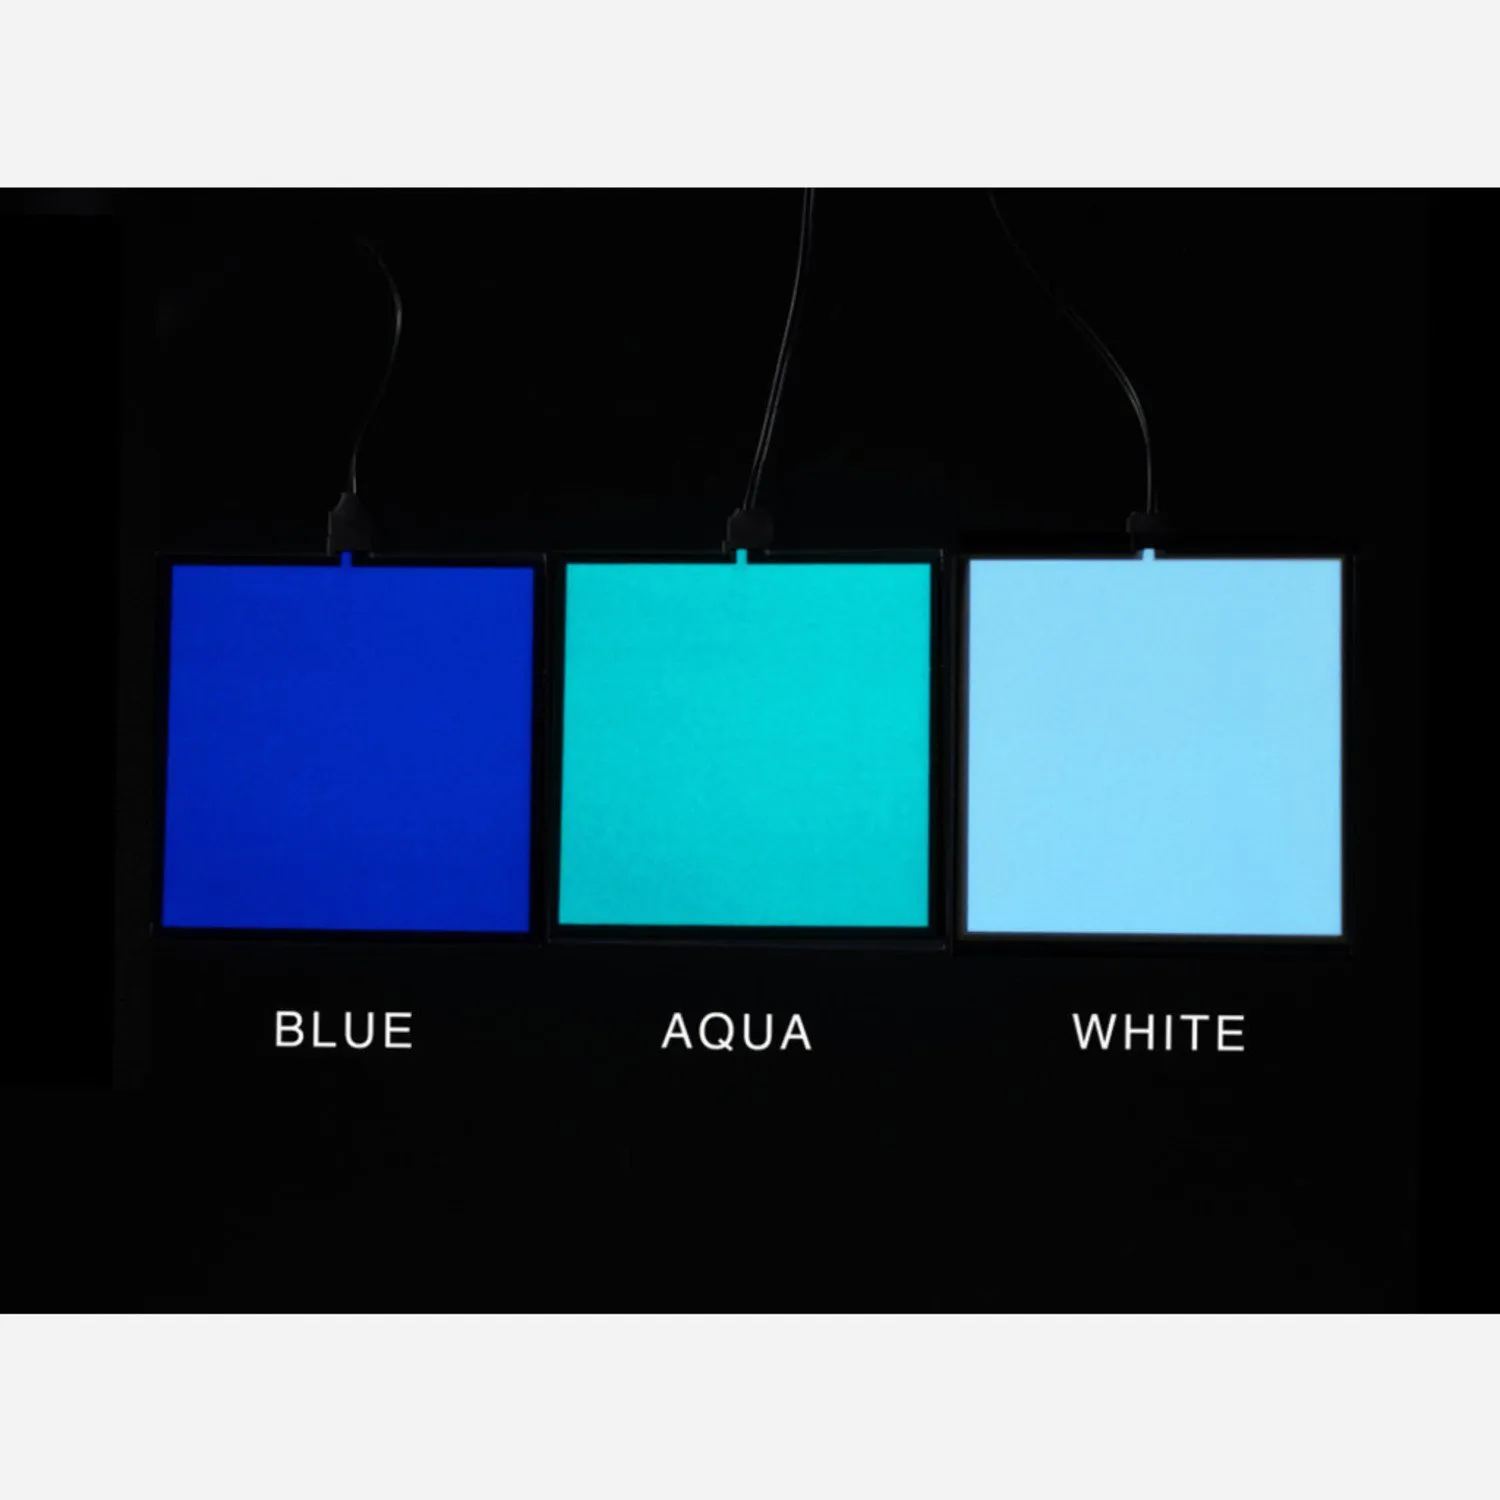 Photo of Electroluminescent (EL) Panel - 10cm x 10cm Blue